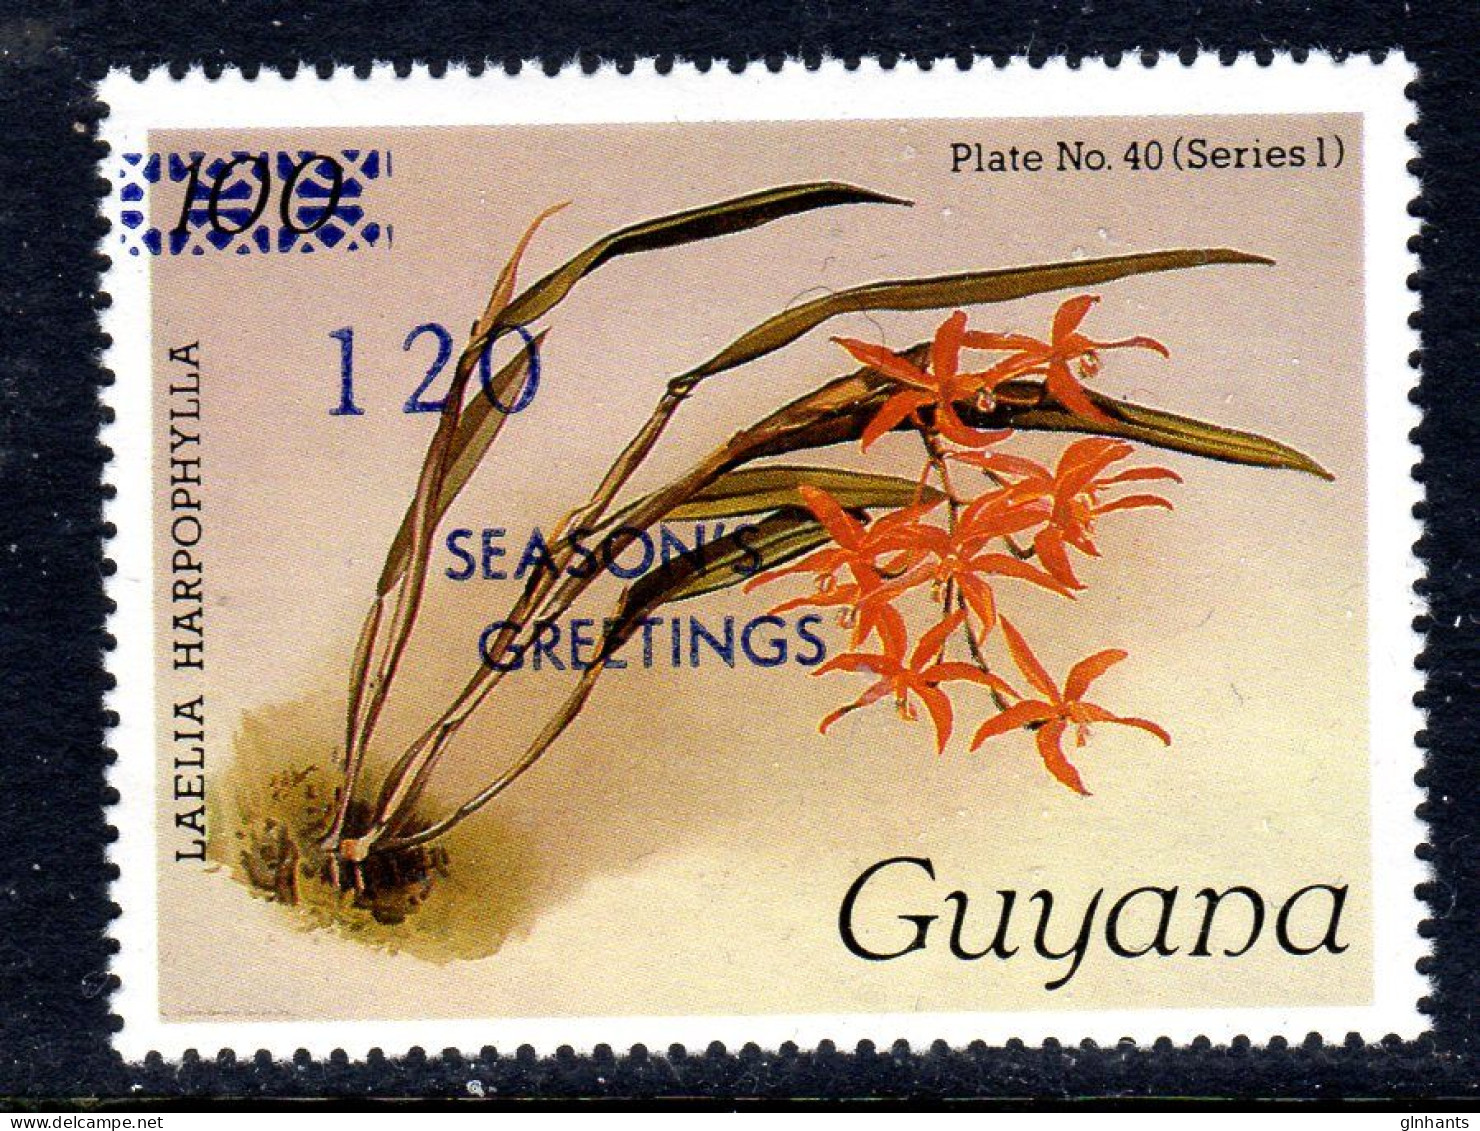 GUYANA - 1988 REICHENBACHIA ORCHIDS OVERPRINTED SEASONS GREETINGS PLATE 40 SERIES 1 FINE MNH ** SG 2523 - Guyana (1966-...)